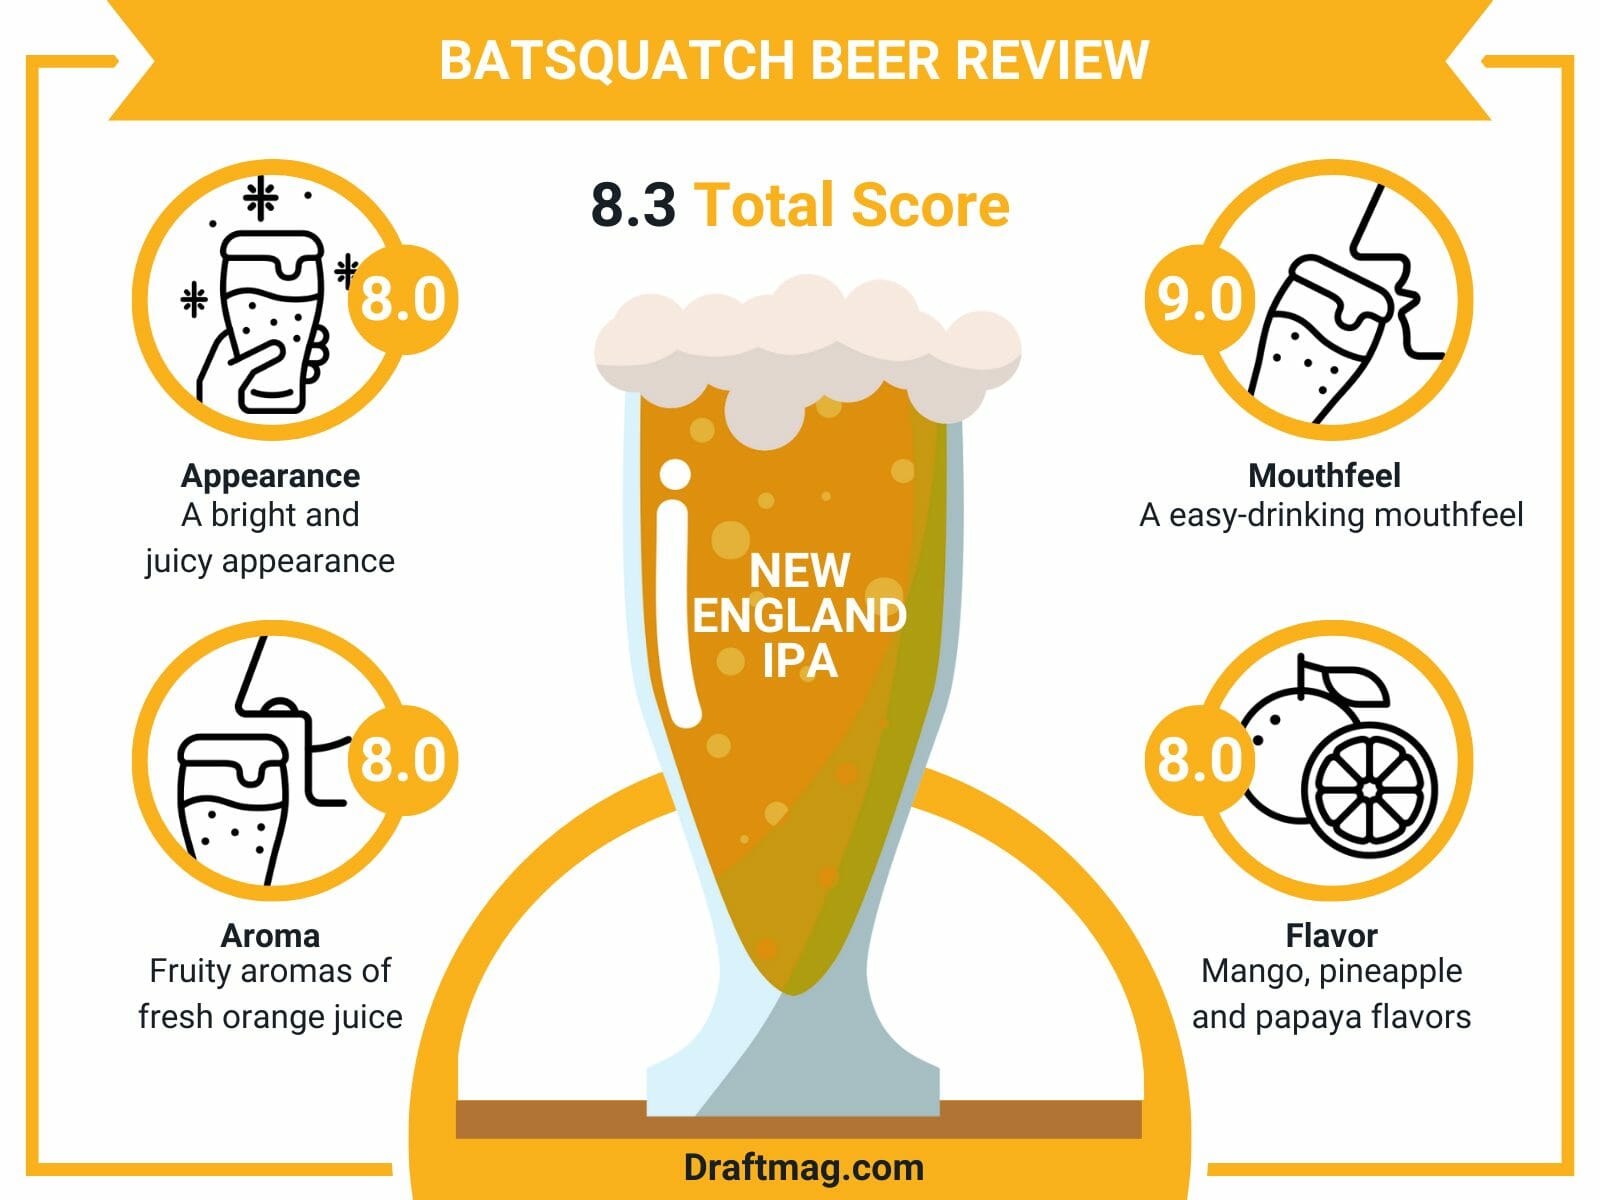 Batsquatch beer review infographic